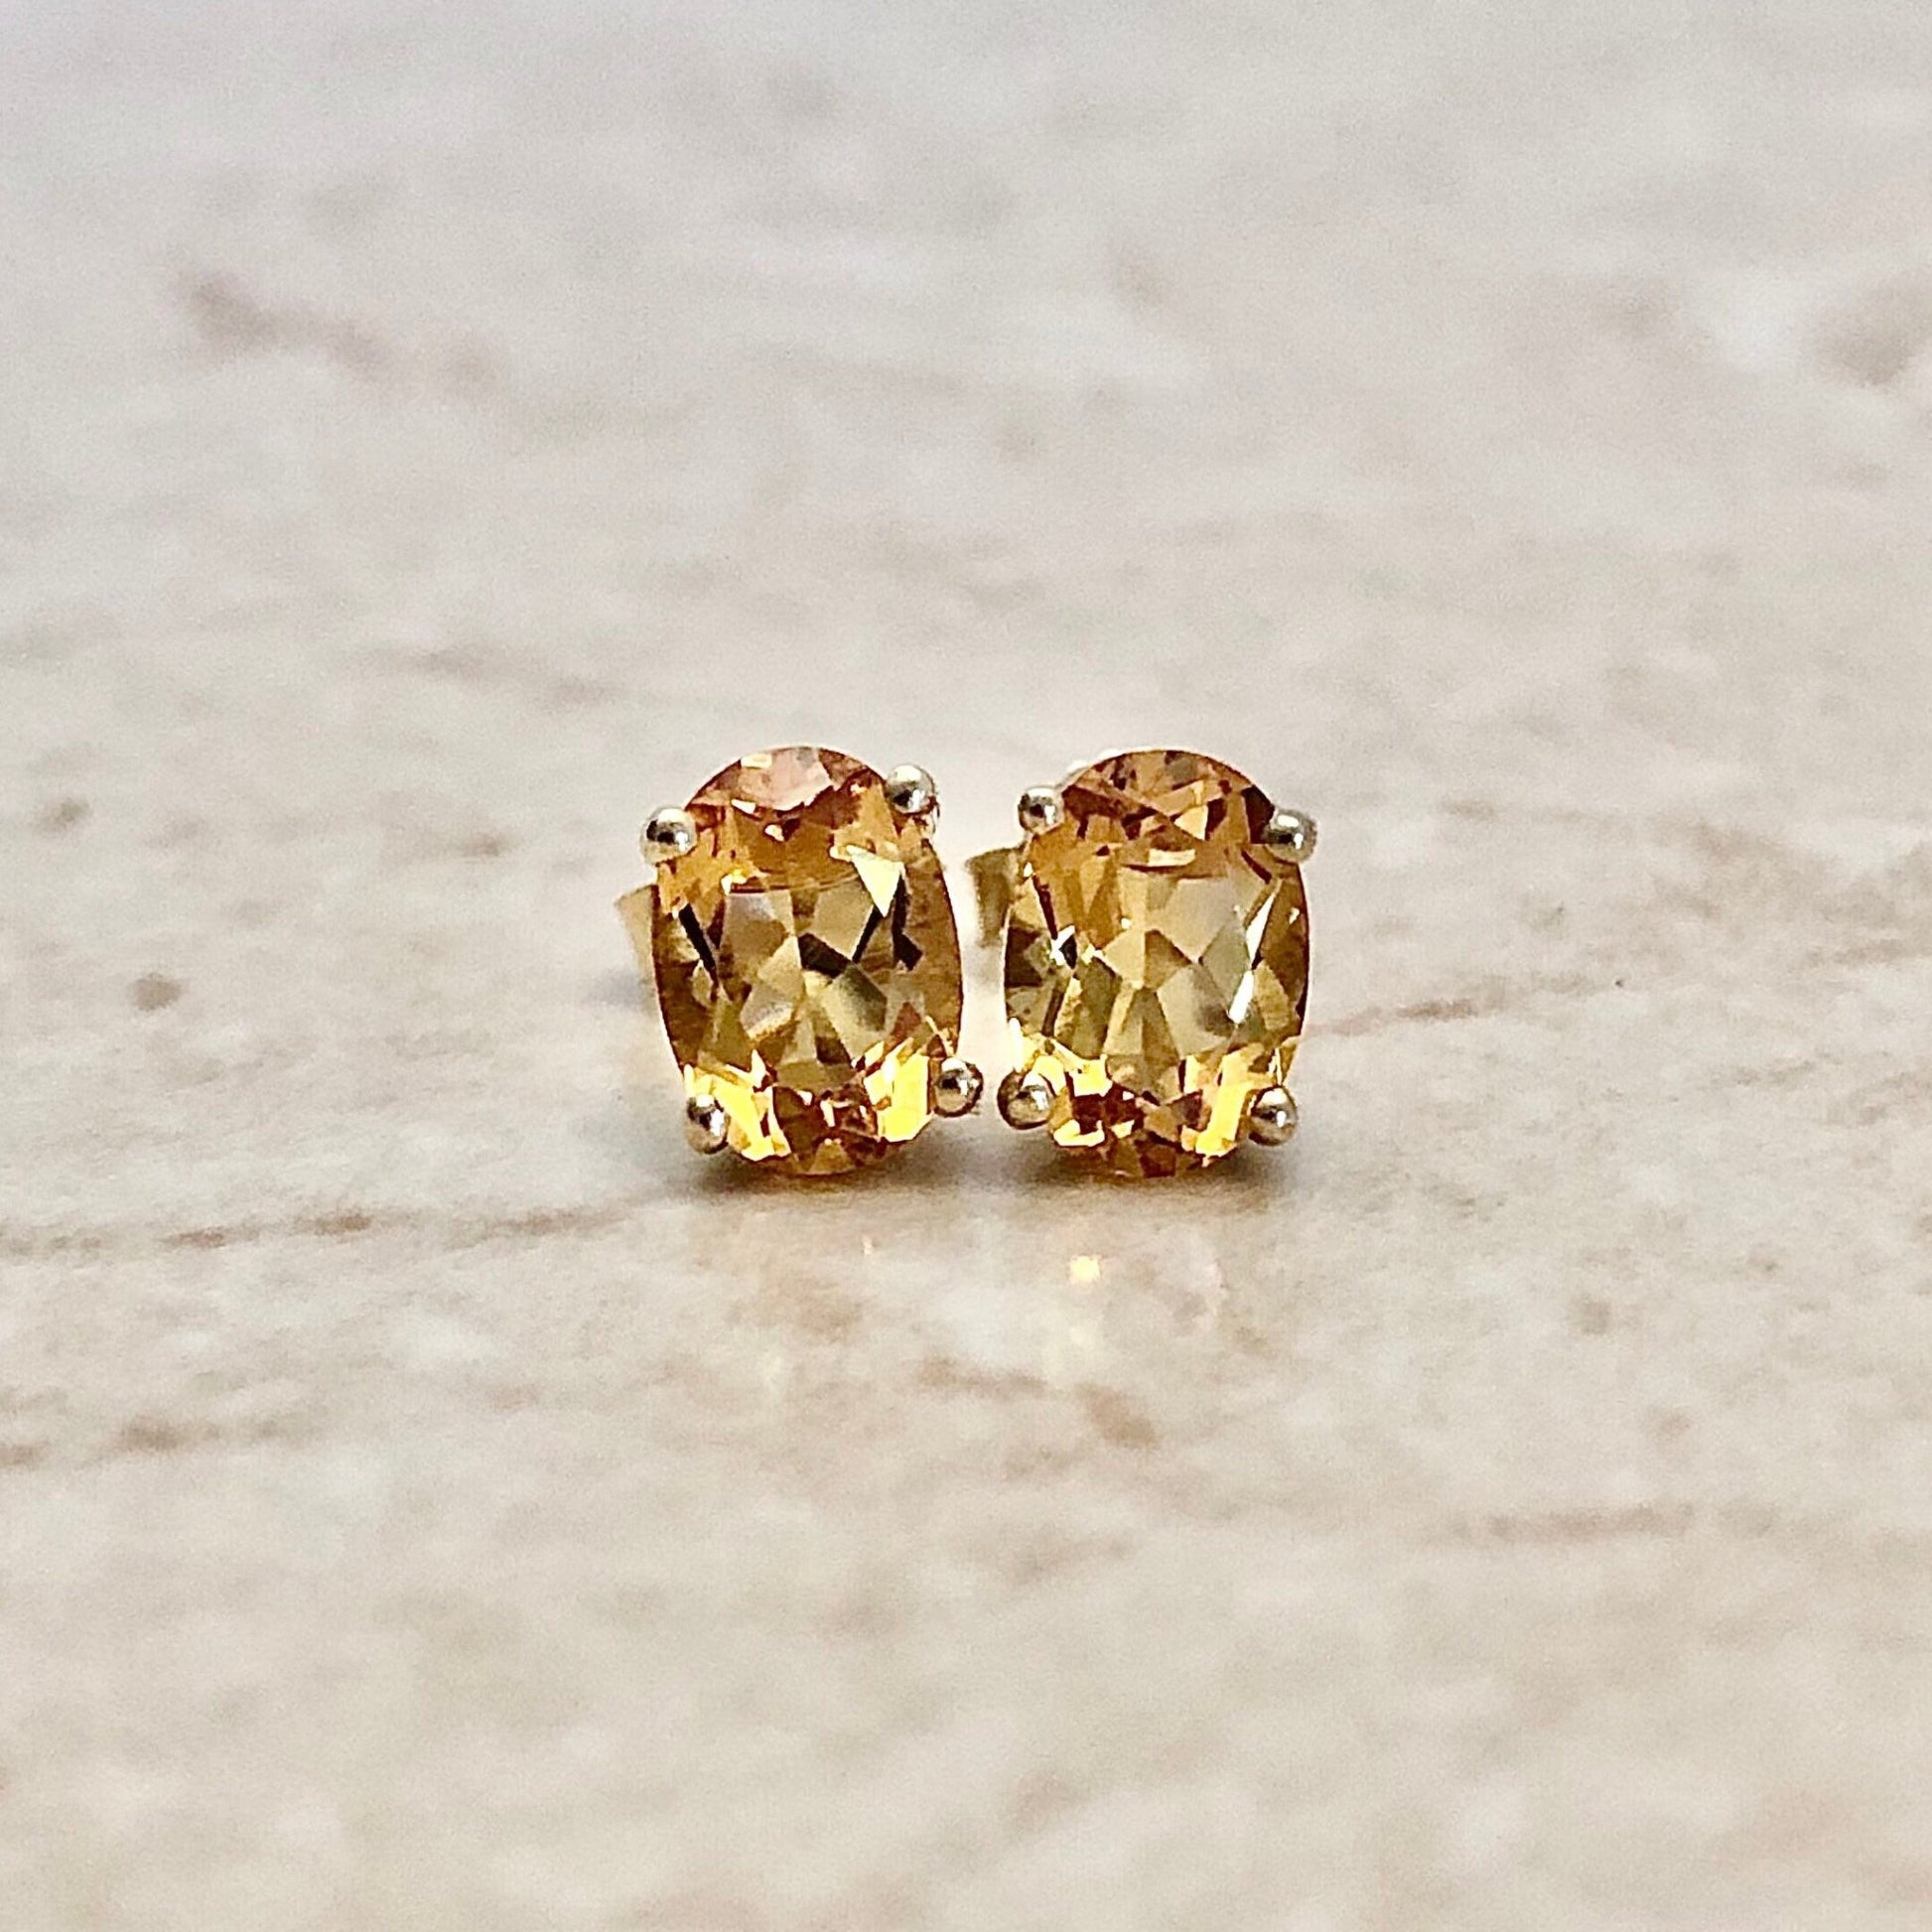 14K Citrine Stud Earrings - Yellow Gold - November Birthstone - Genuine Gemstone - Push Backs - Birthday Gift